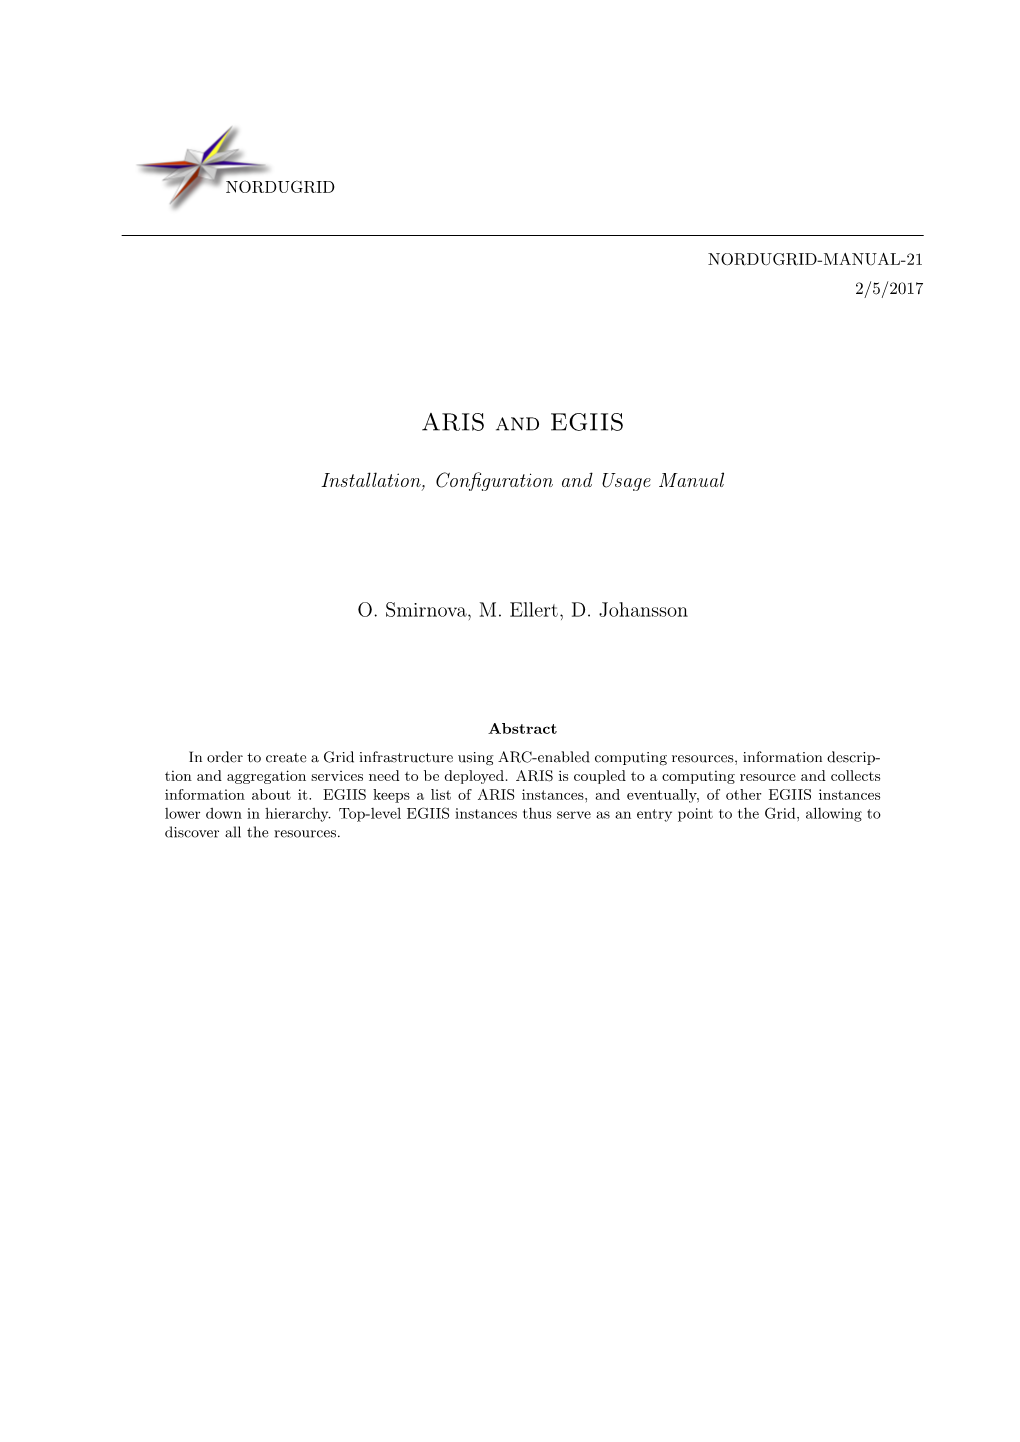 ARIS and EGIIS Installation, Configuration and Usage Manual